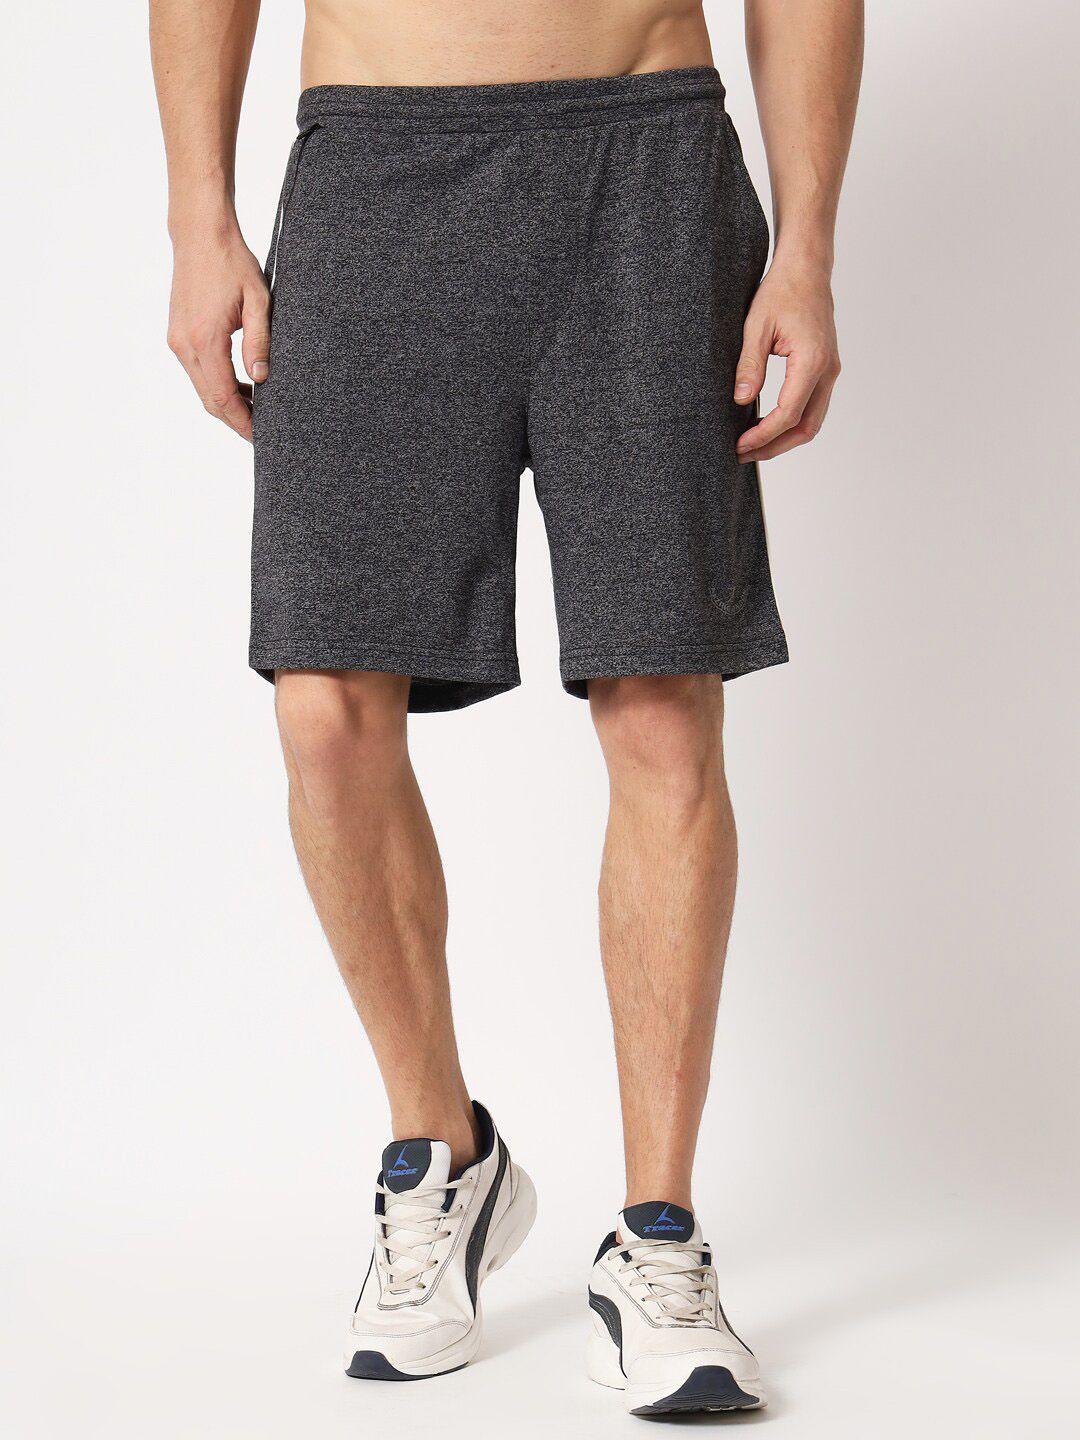 aazing-london-men-black-solid-cotton-sports-shorts